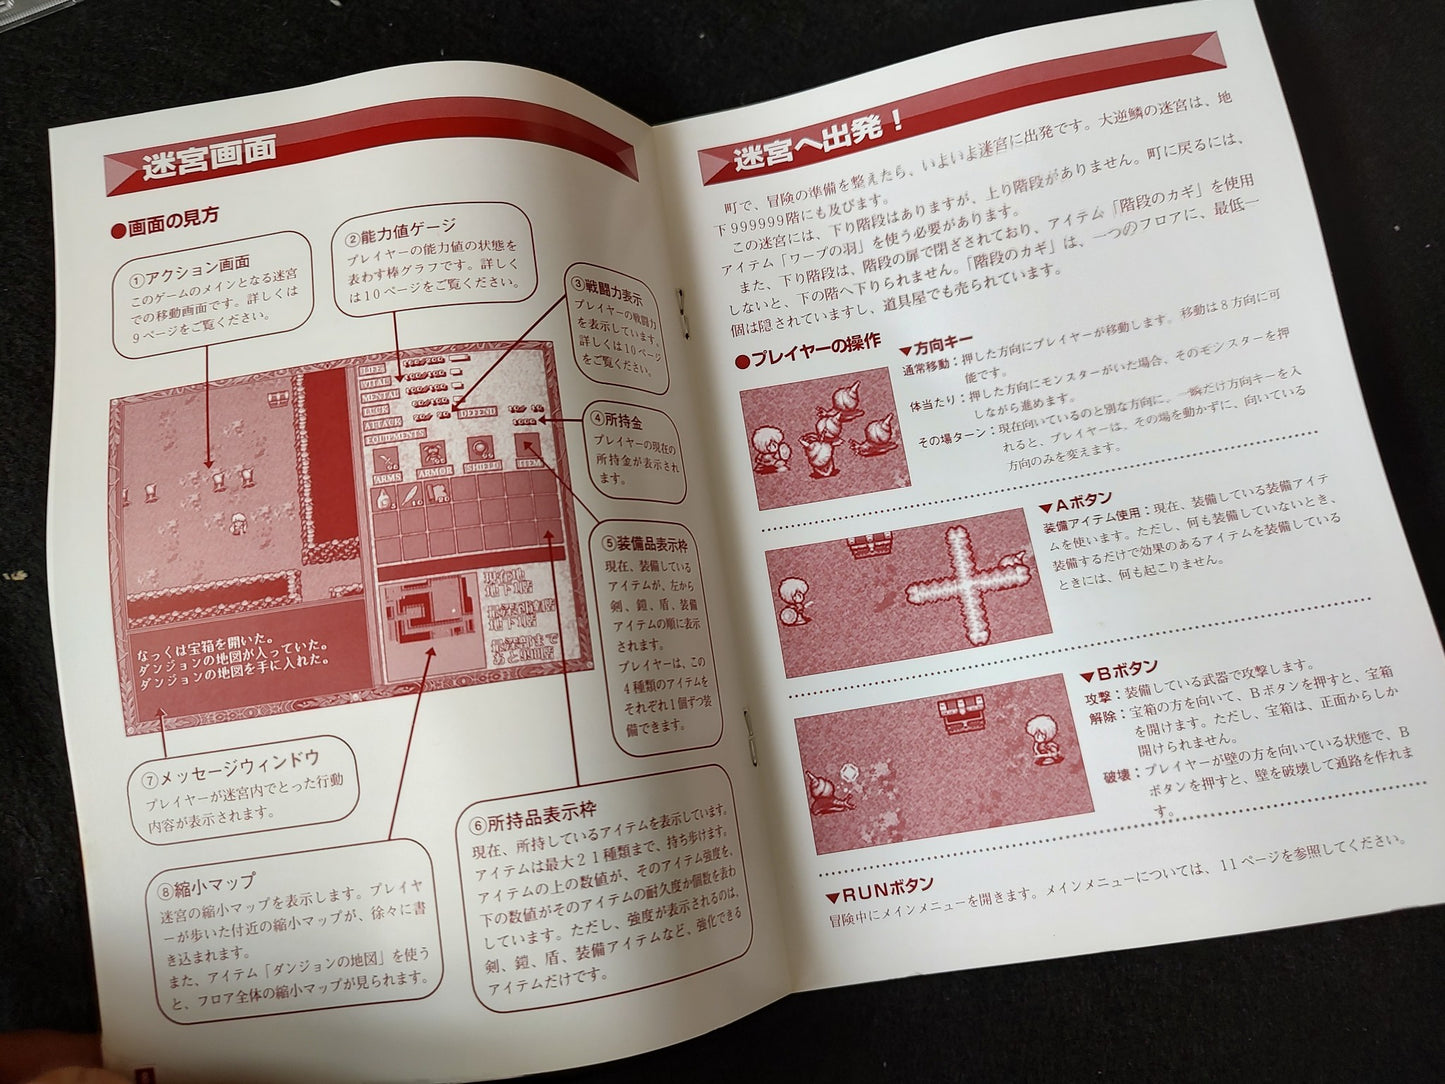 DAI GEKIRIN FM TOWNS Action RPG Game Disk,w/Manual, Box set, Not tested-f0614-